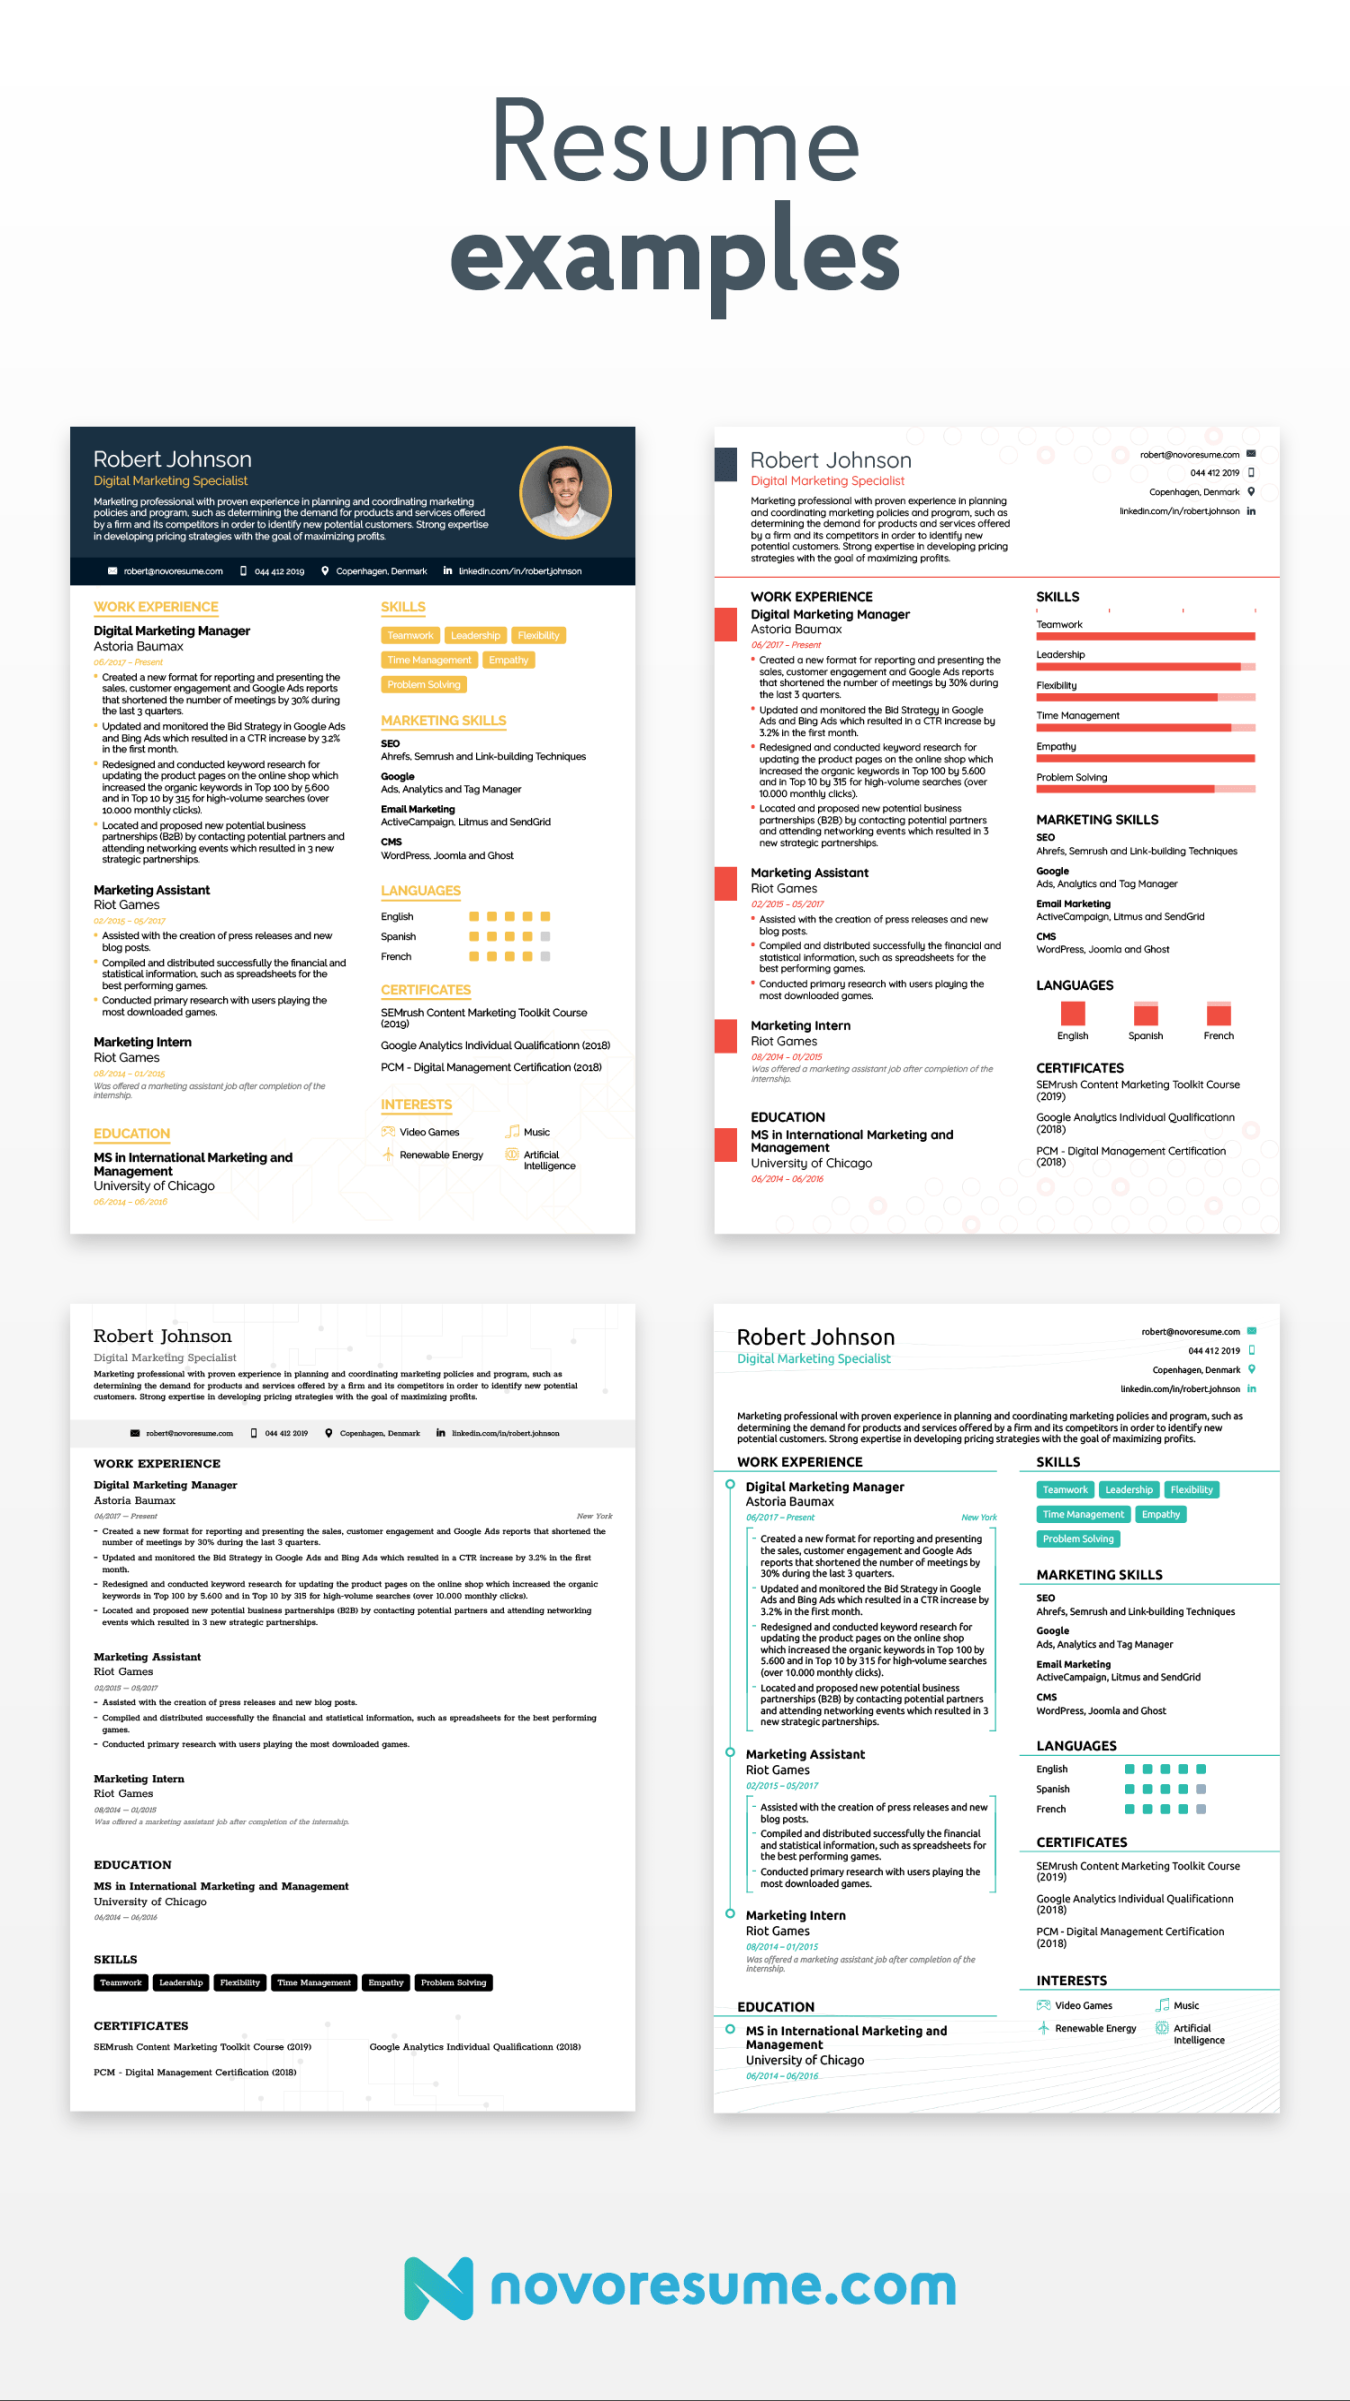 australian resume guide amp formatting tips free templates